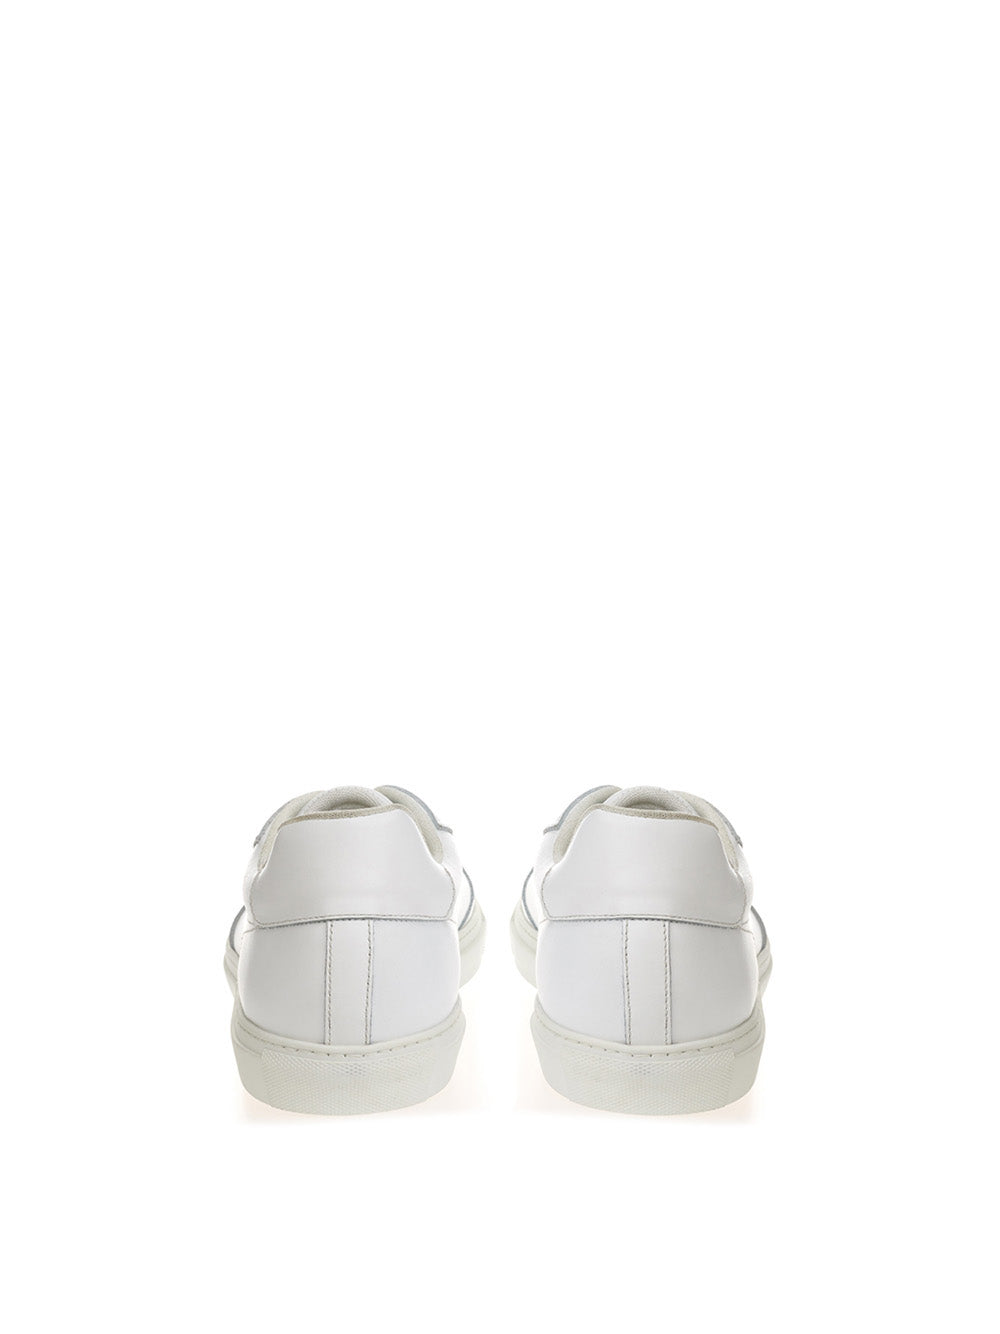 Roberto Cavalli White Leather Low Sneakers